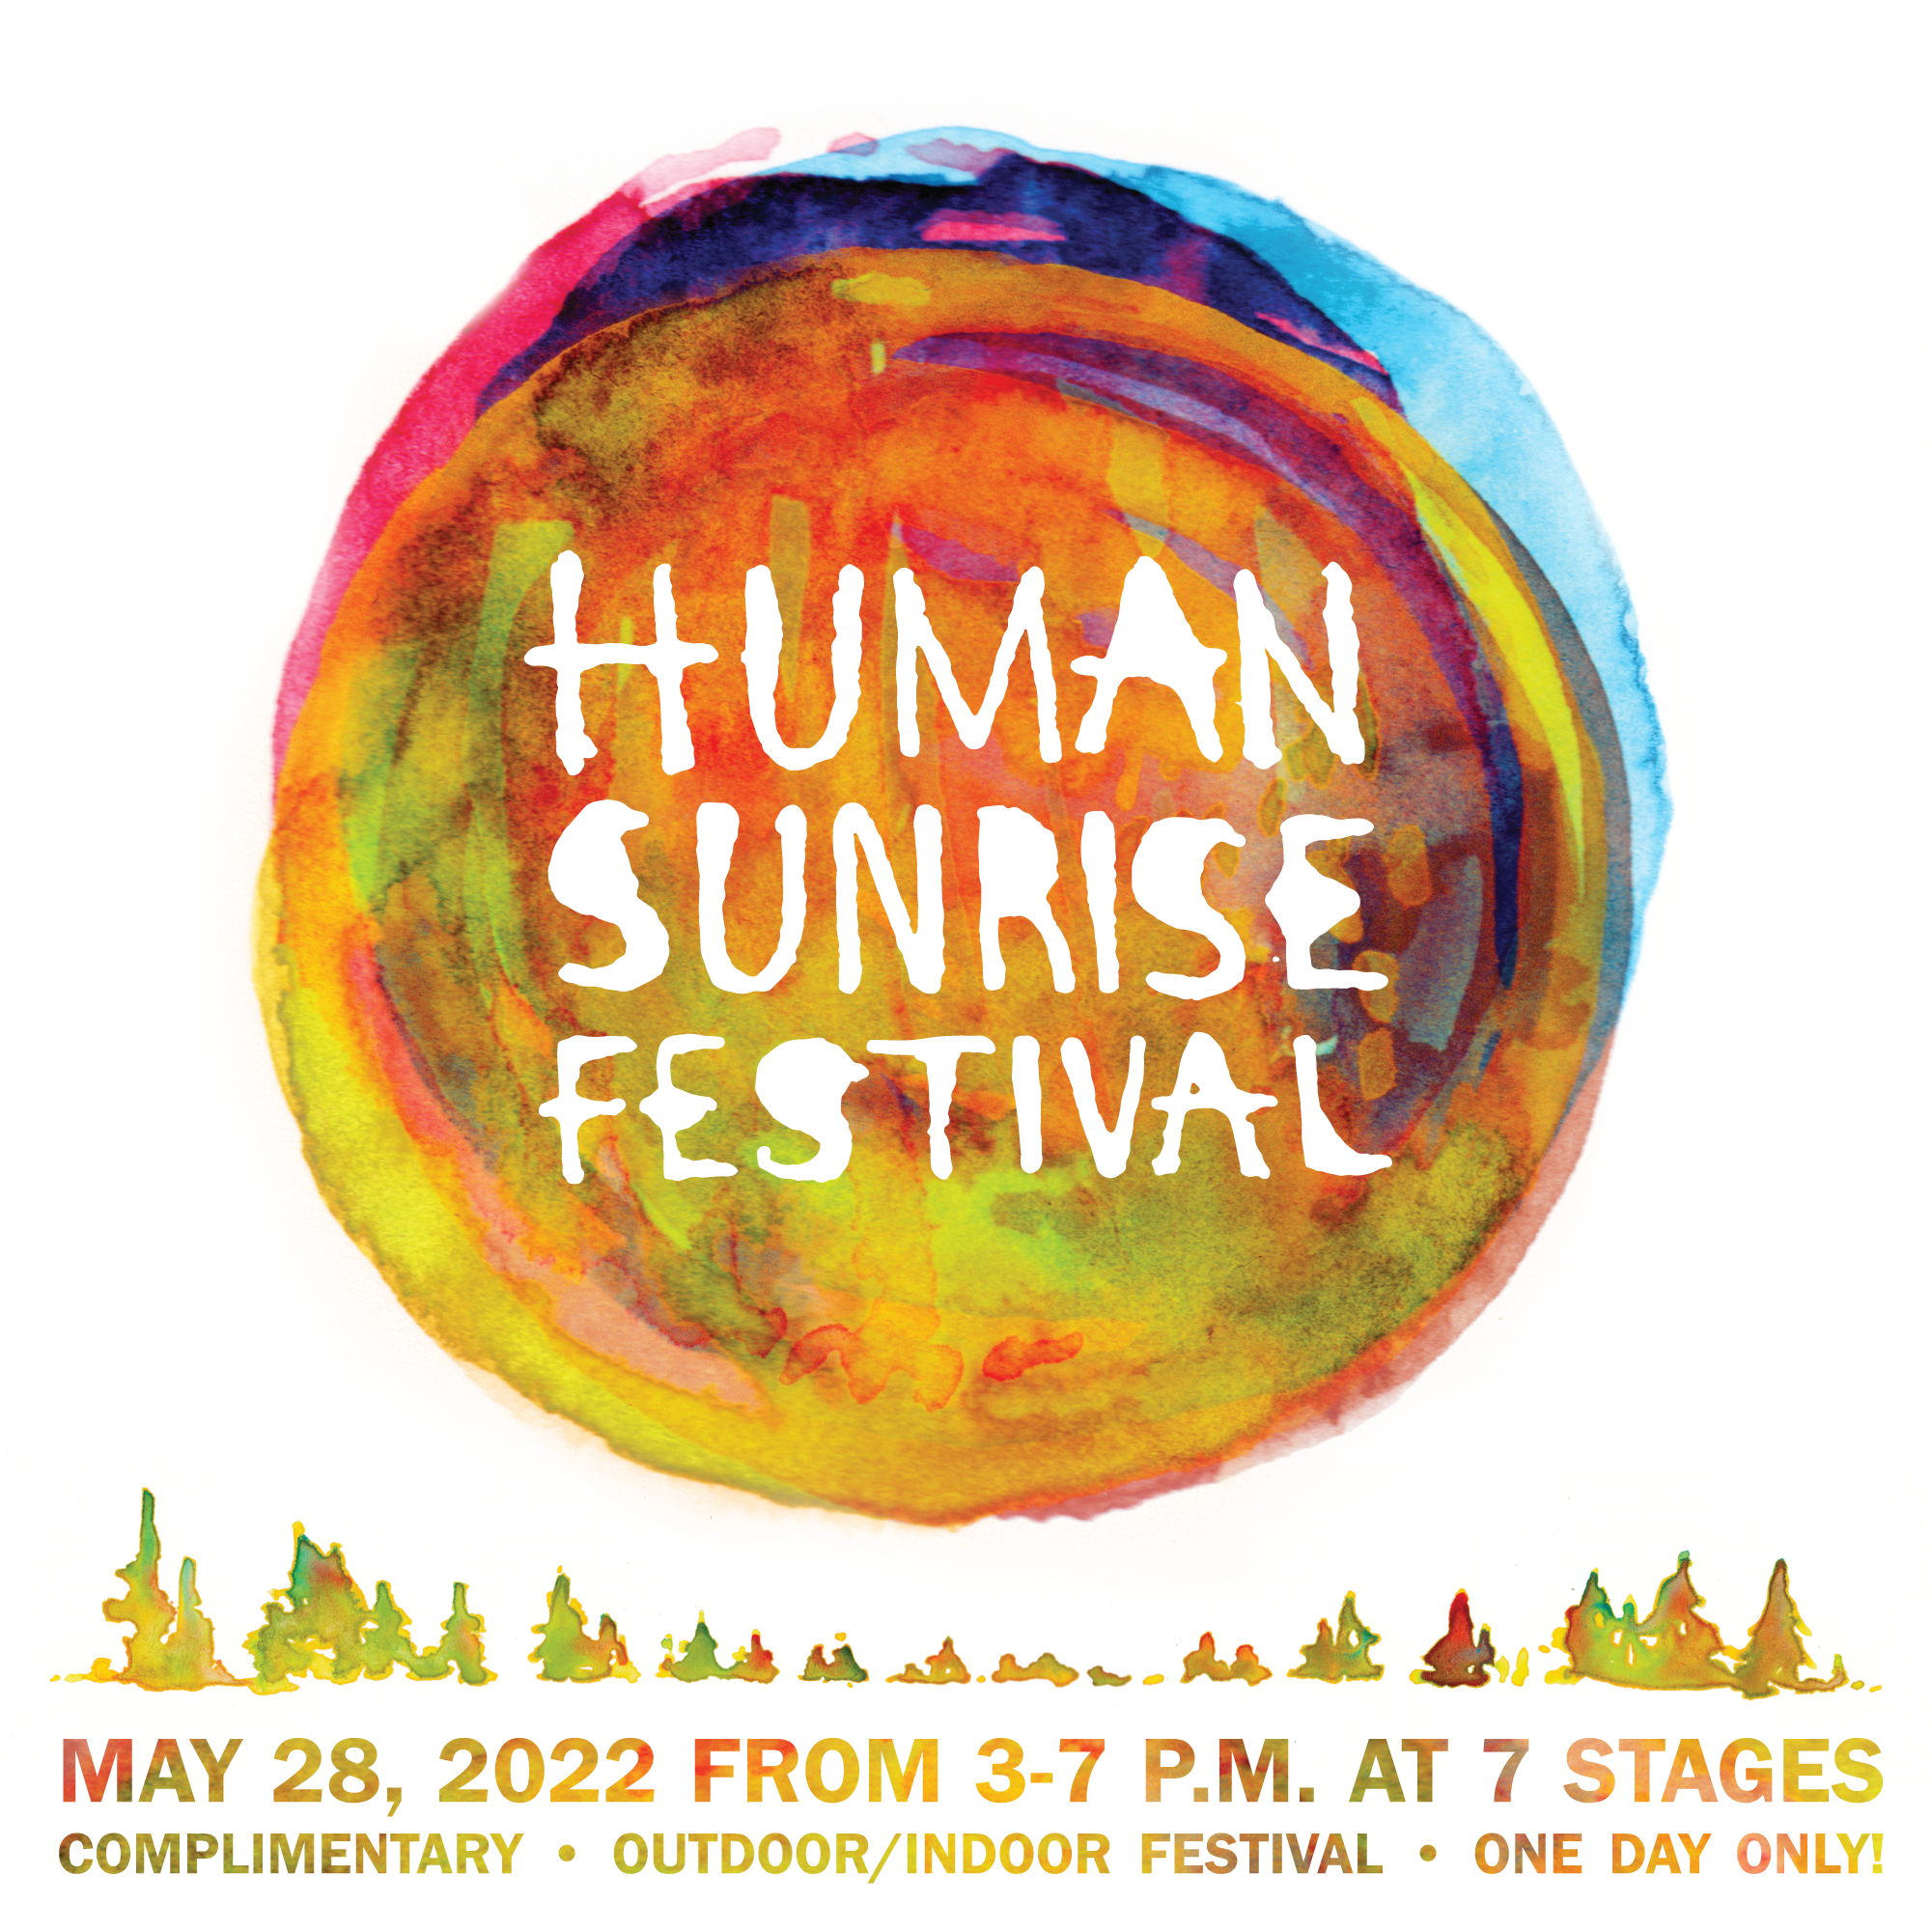 Human Sunrise Festival